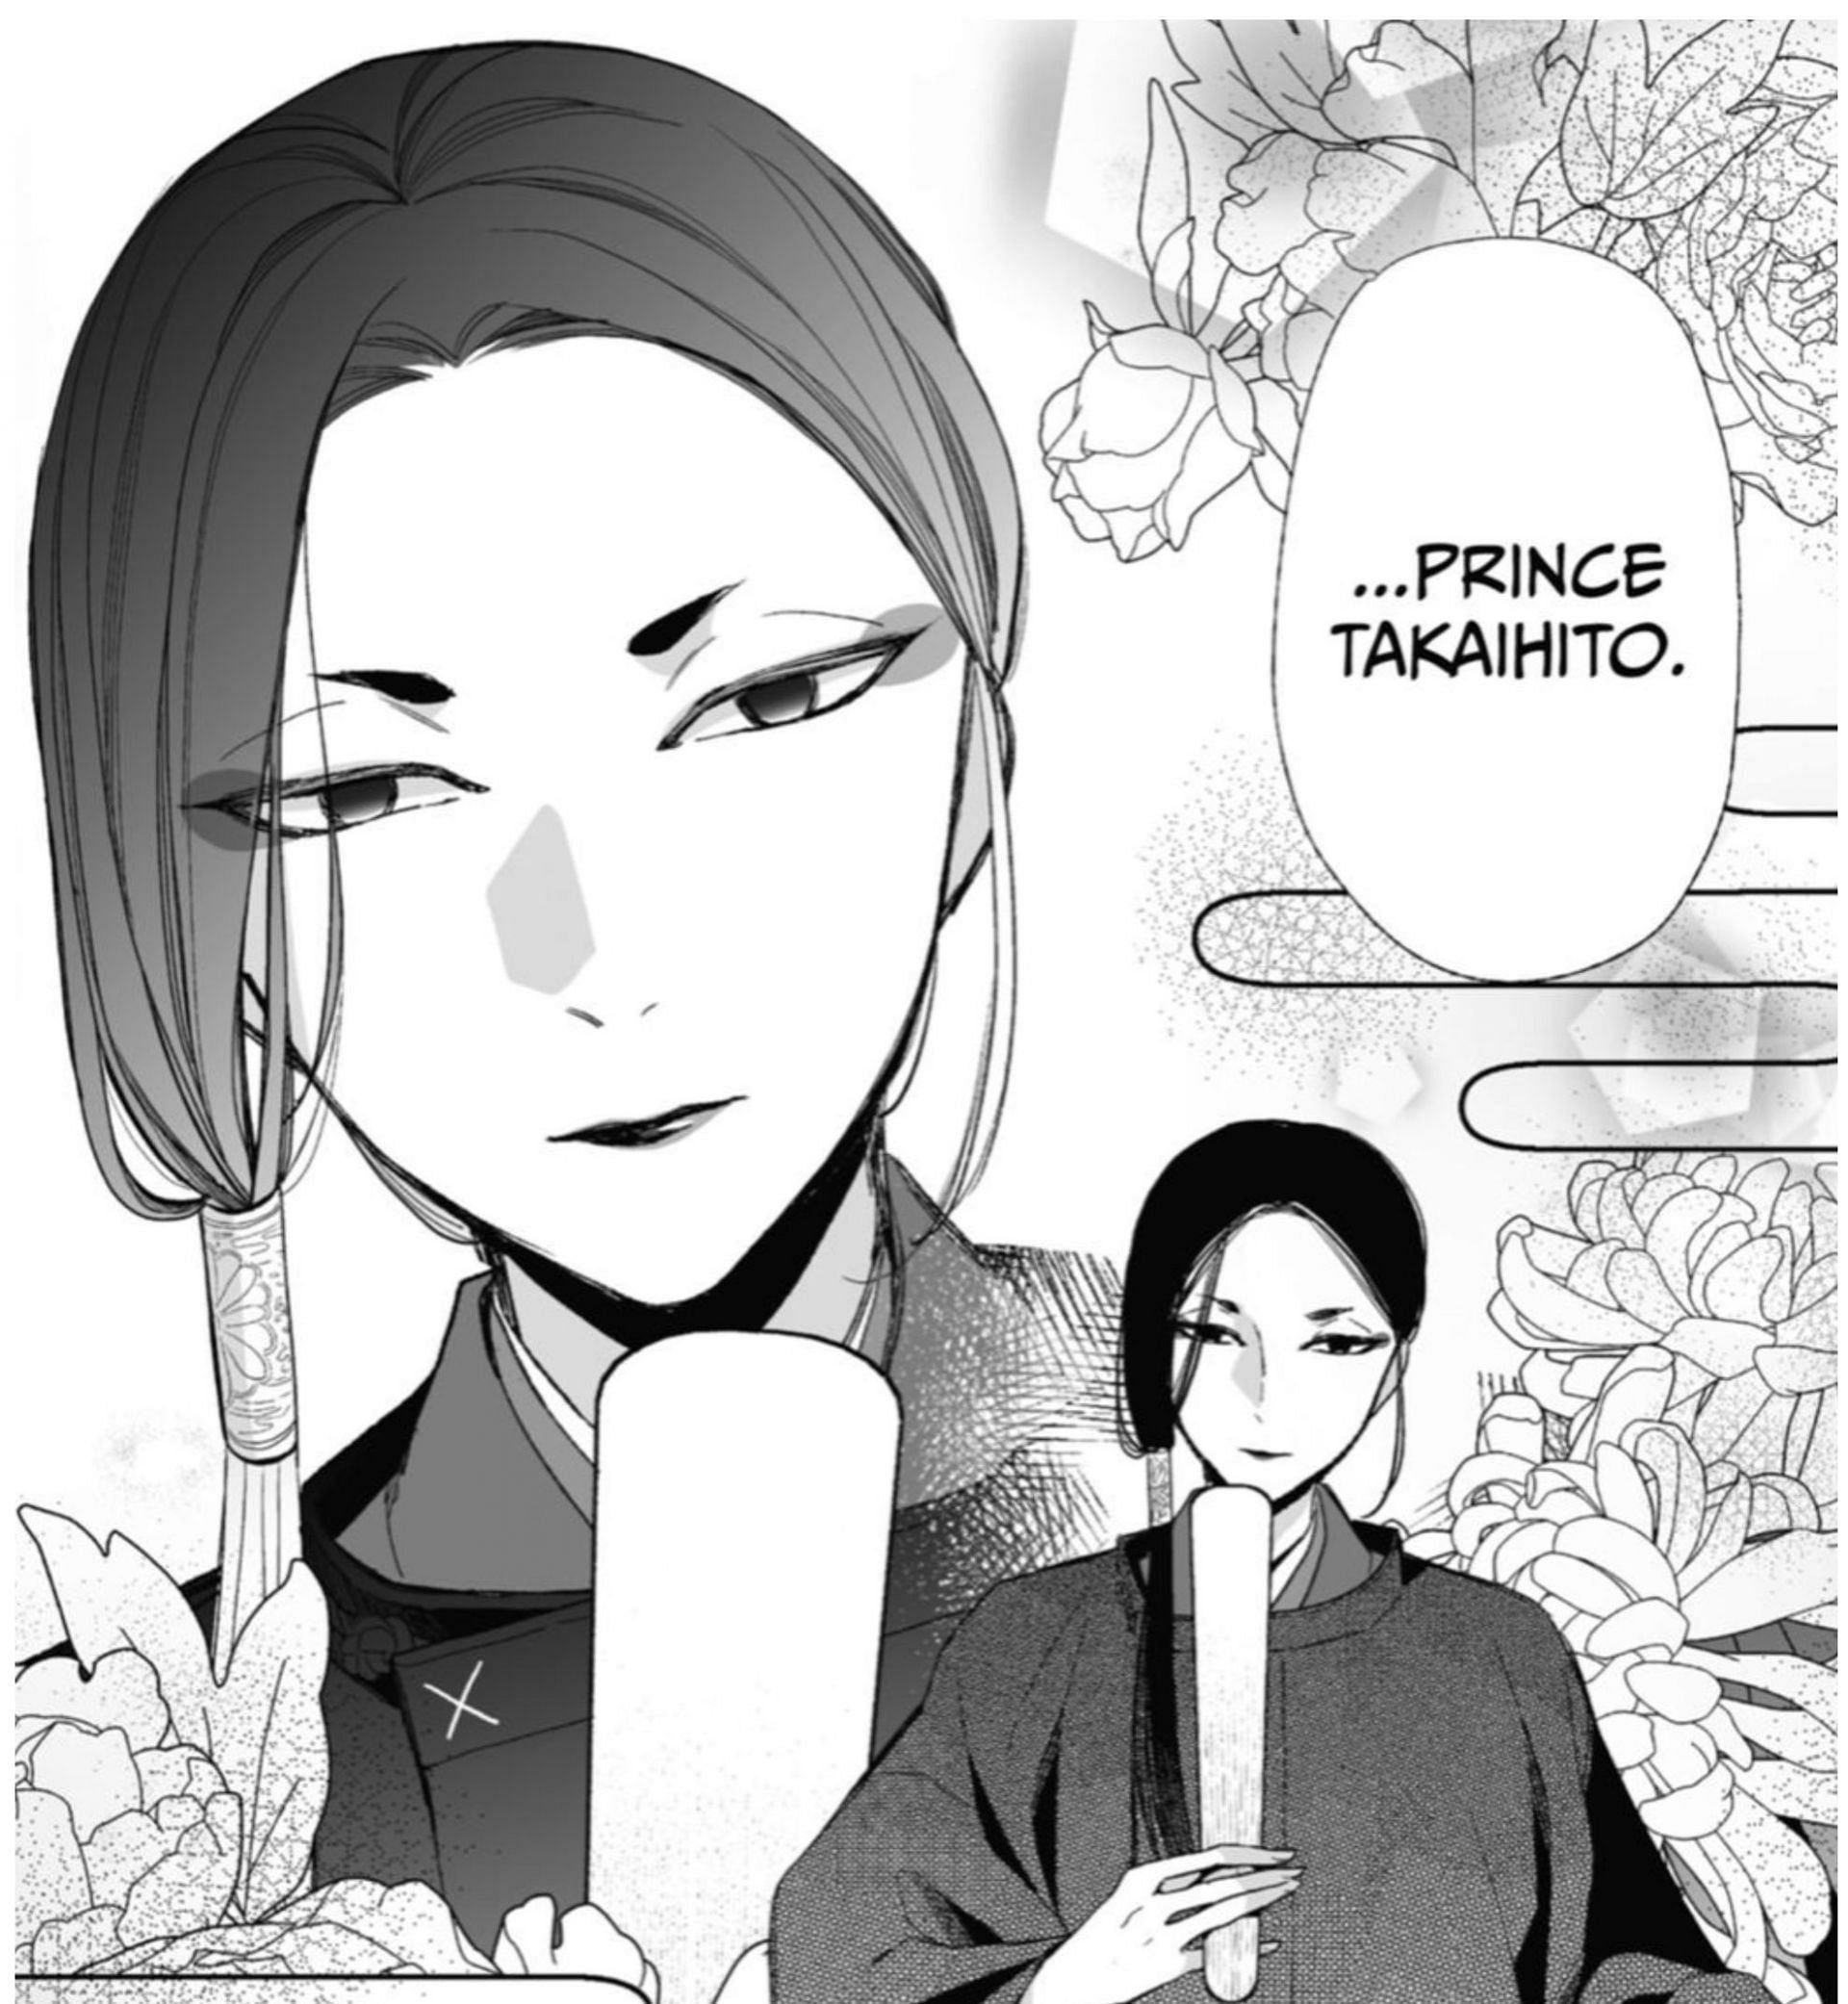 Prince Takaihito (image sourced via My Happy Marriage manga)